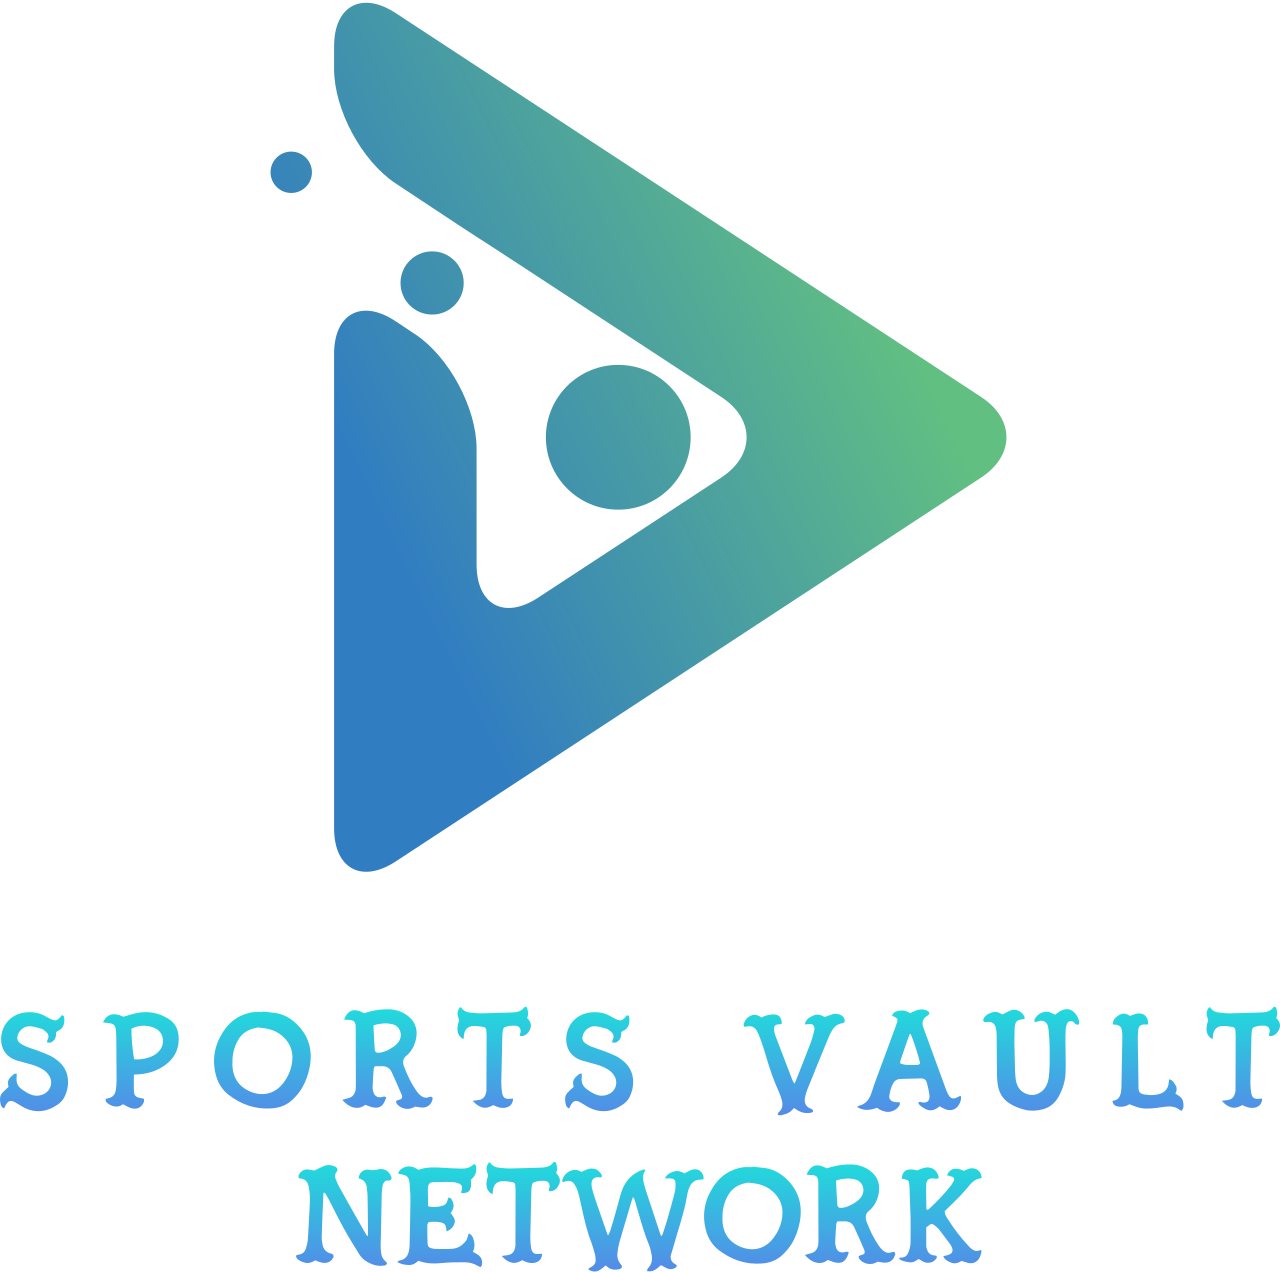 Sports Vault Network's logo